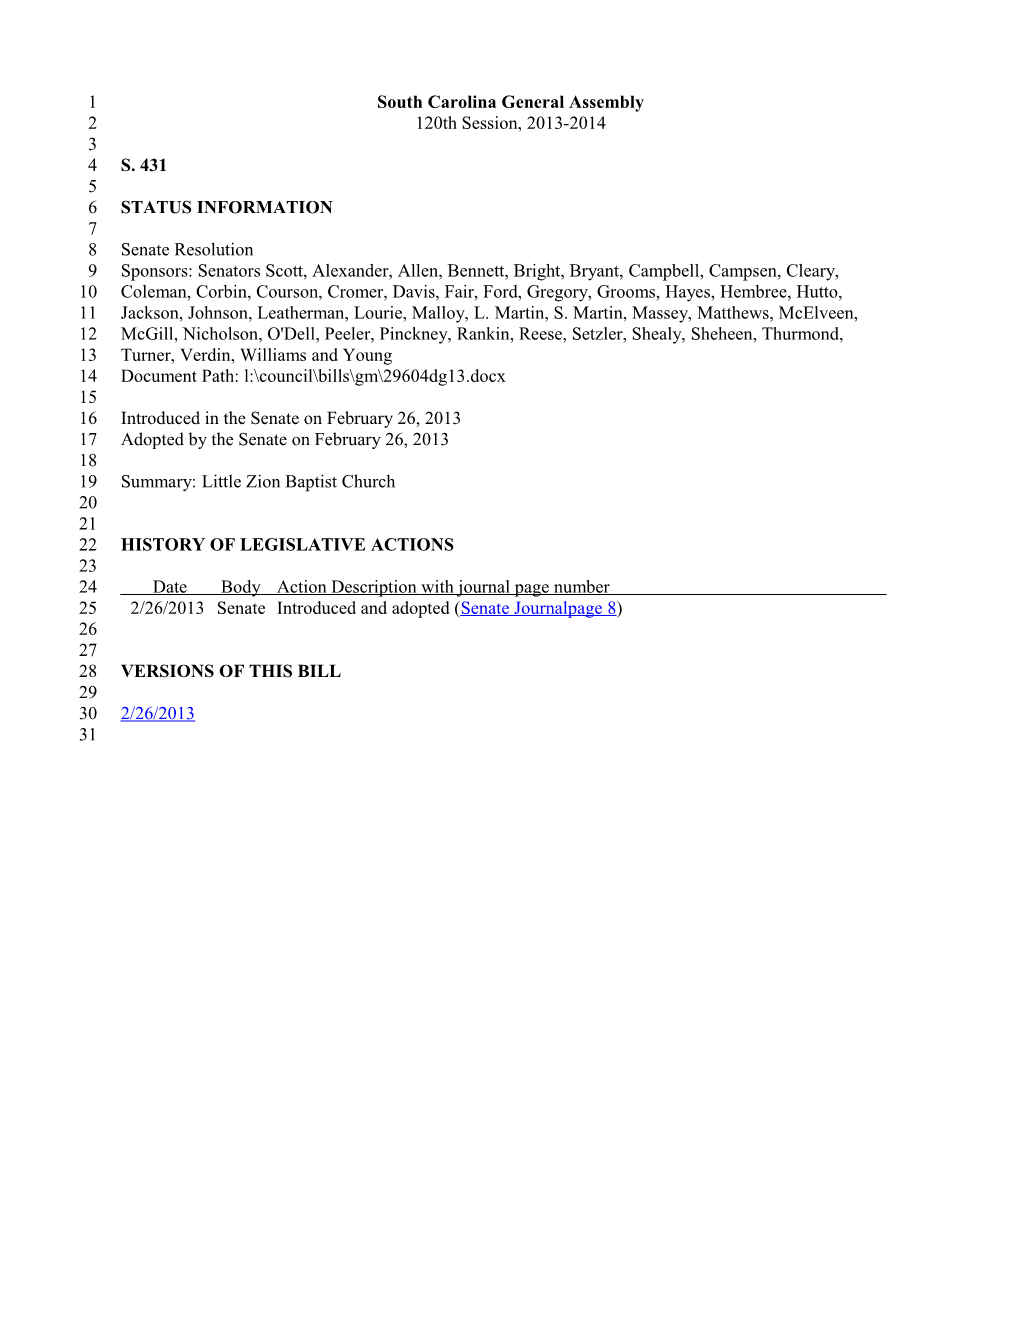 2013-2014 Bill 431: Little Zion Baptist Church - South Carolina Legislature Online